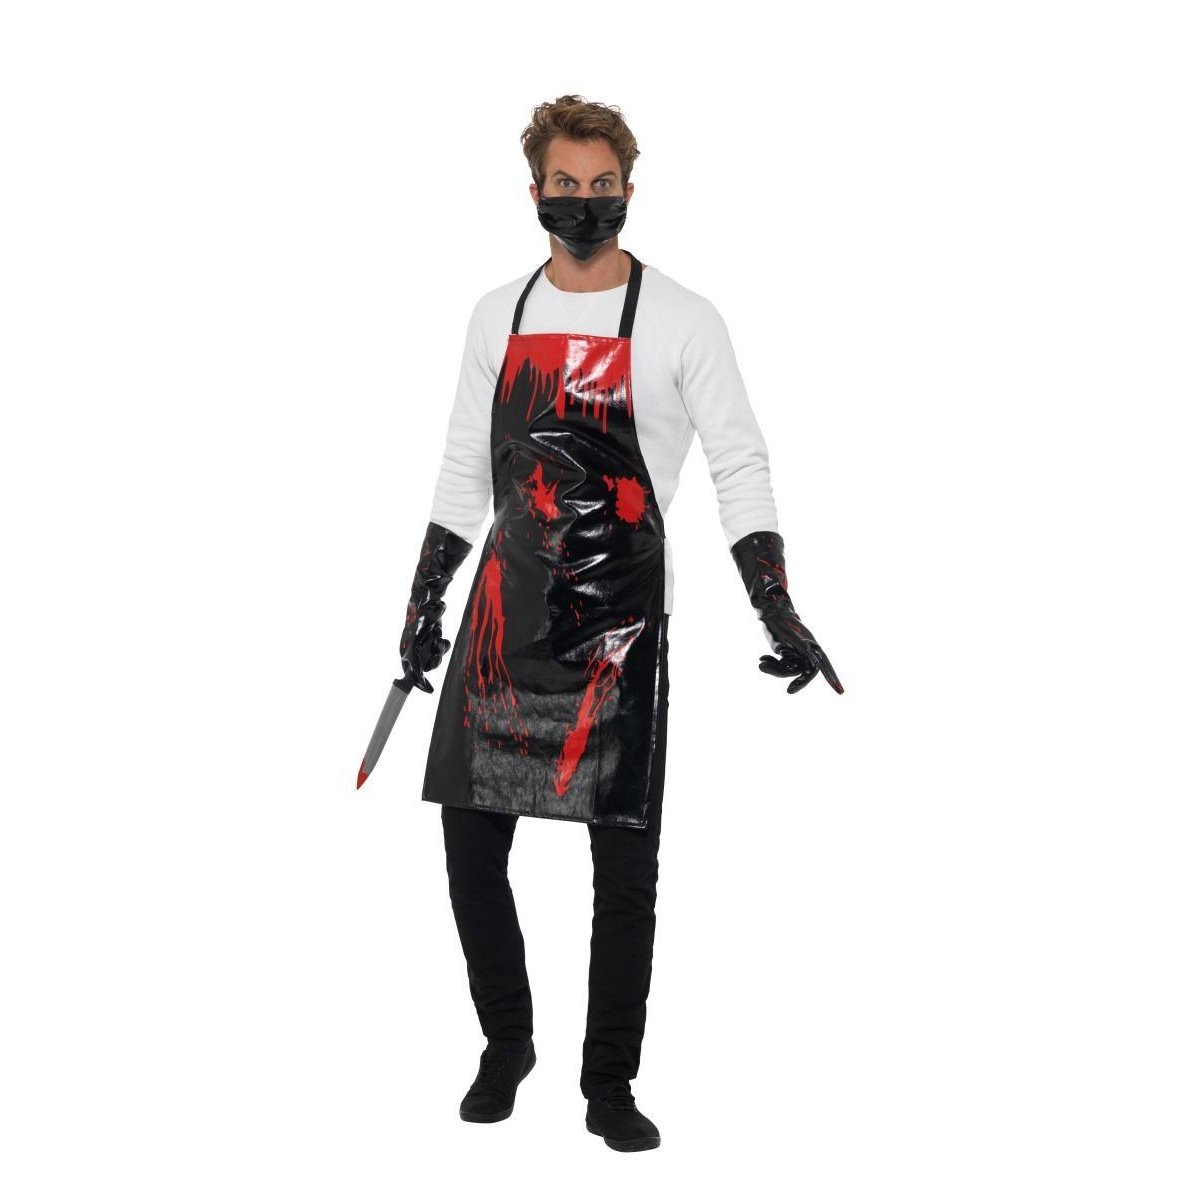 Bloody Surgeon/Butcher Kit, Halloween Adult Fancy Dress, One Size